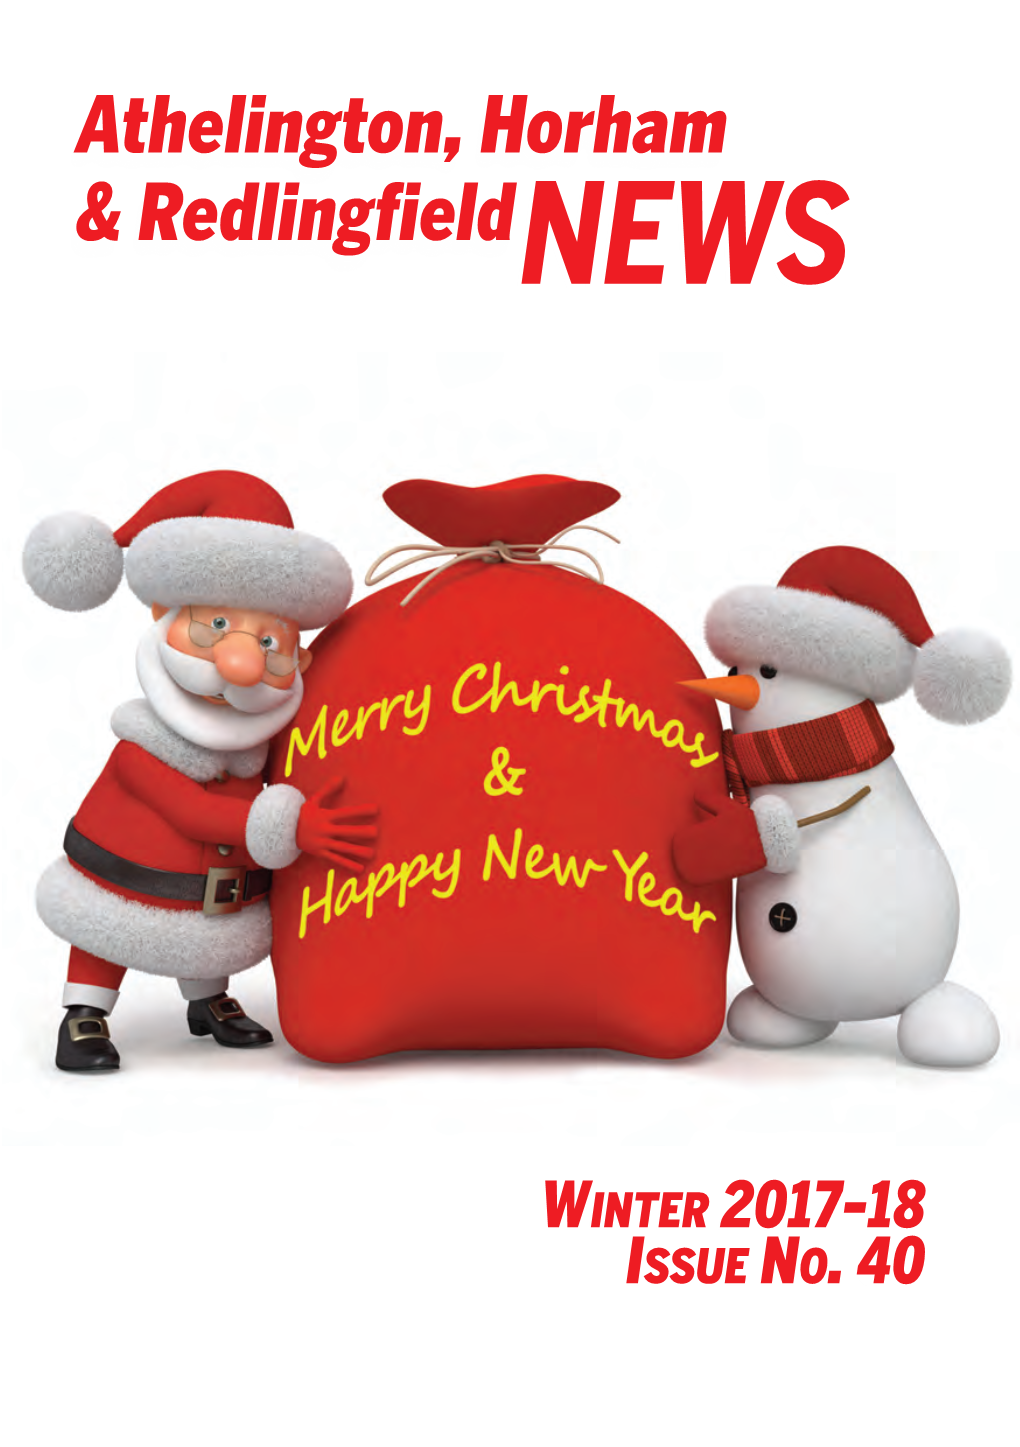 Athelington, Horham & Redlingfield News Winter 2017-18